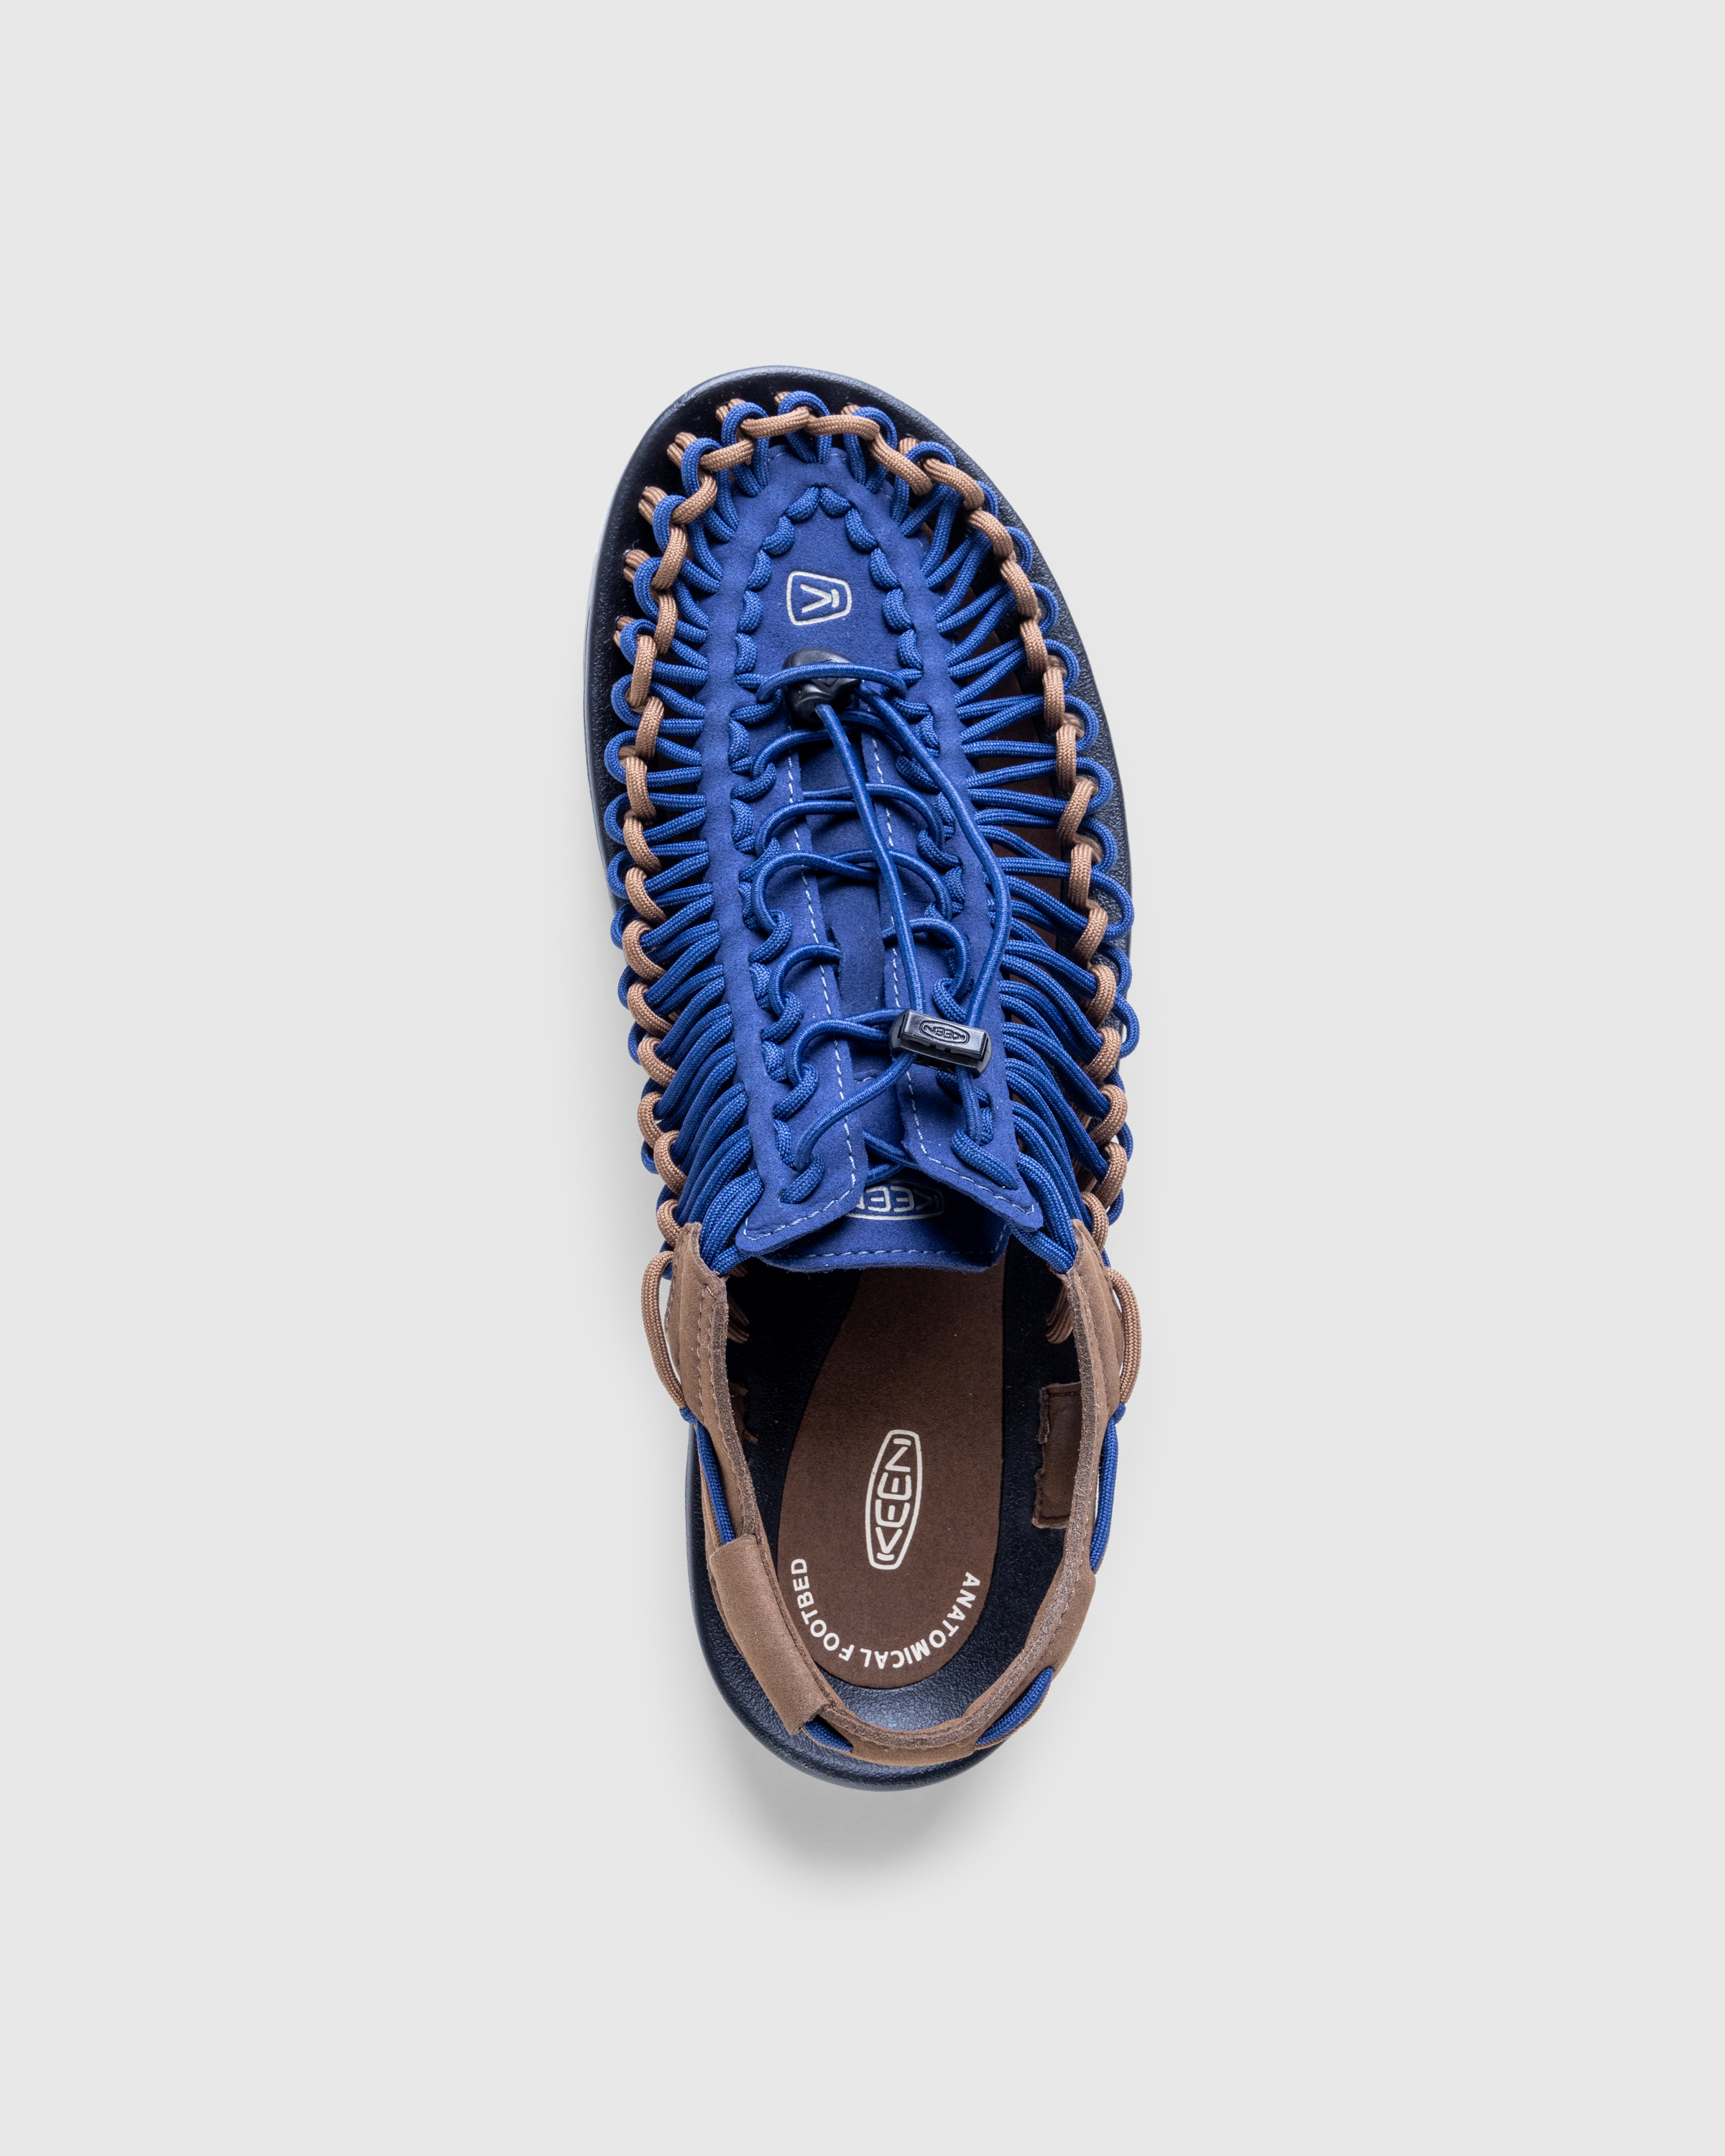 Keen – Uneek M Naval Academy/Bison - Sandals - Blue - Image 5